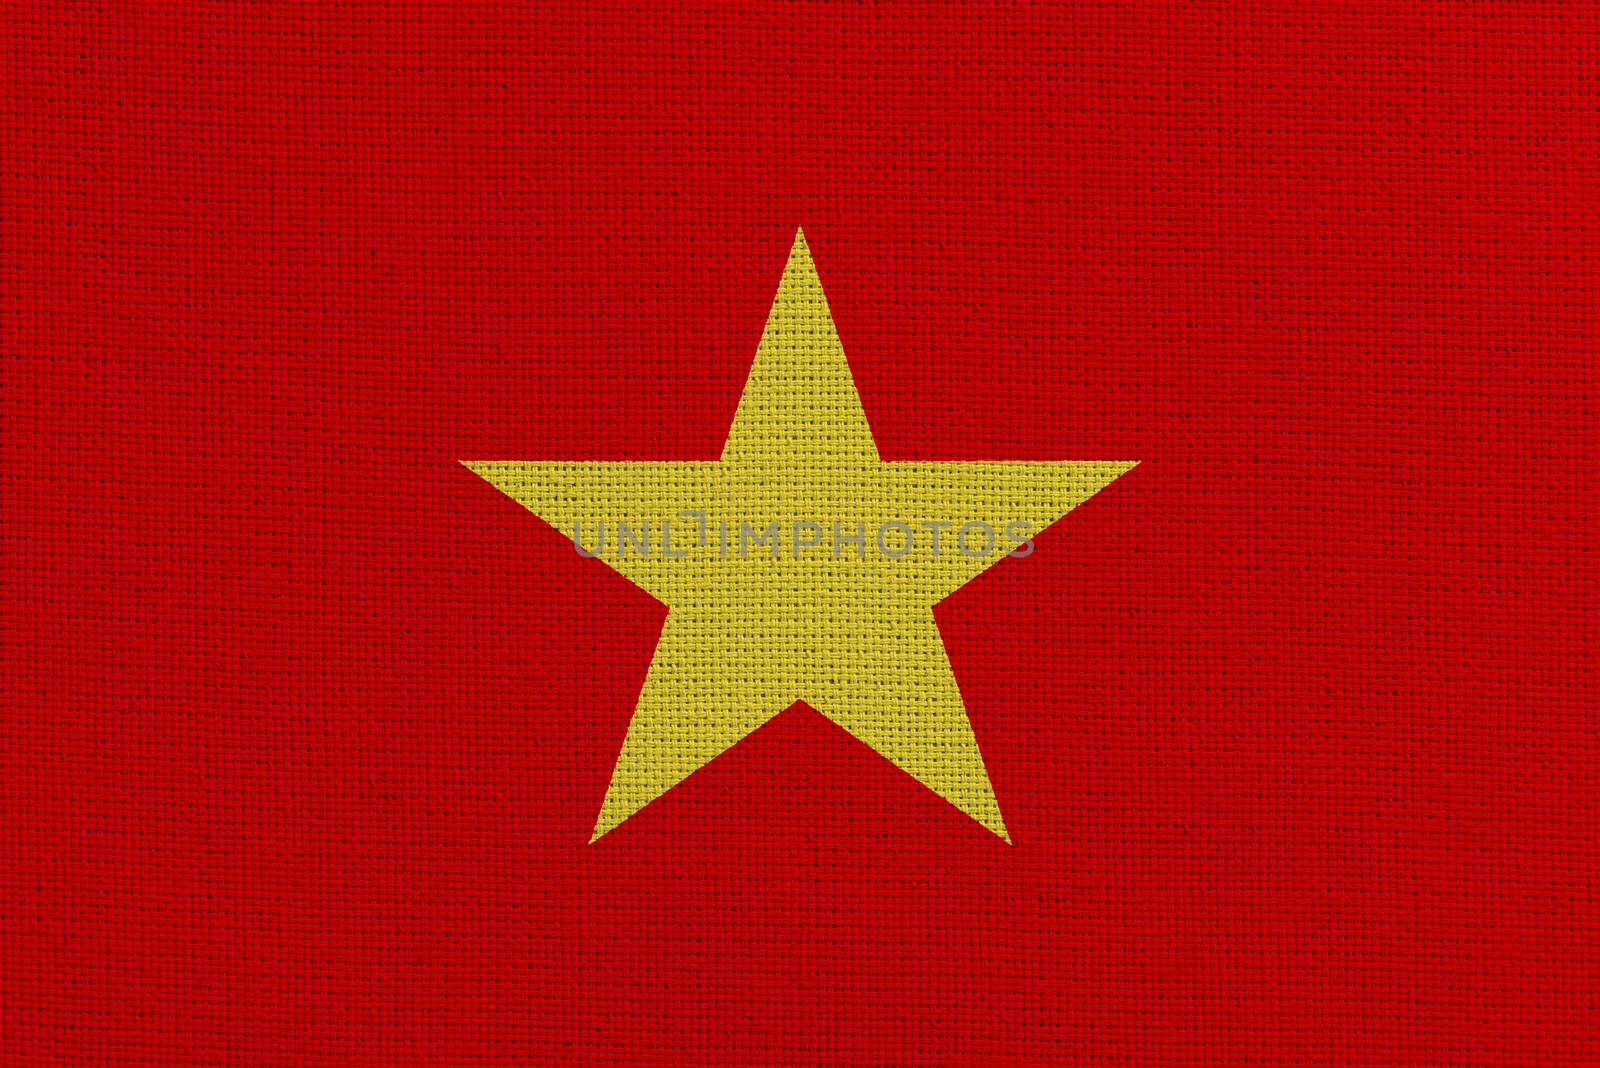 Vietnam fabric flag. Patriotic background. National flag of Vietnam